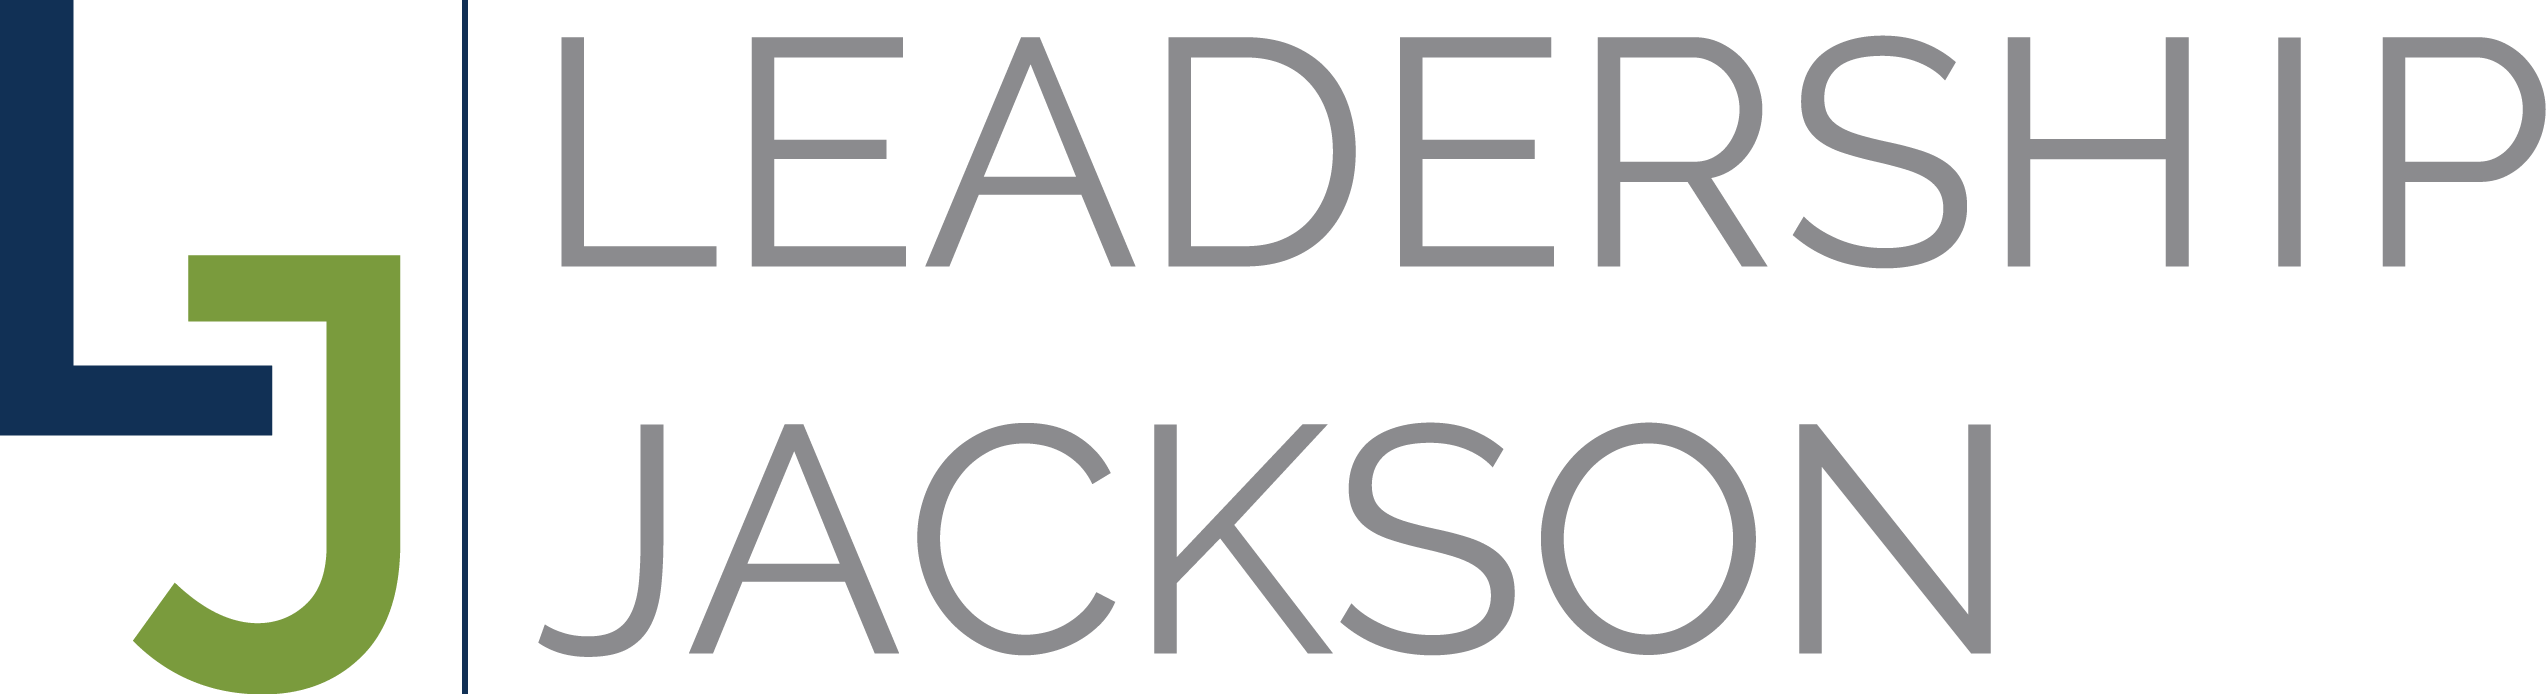 Leadership Jackson logo